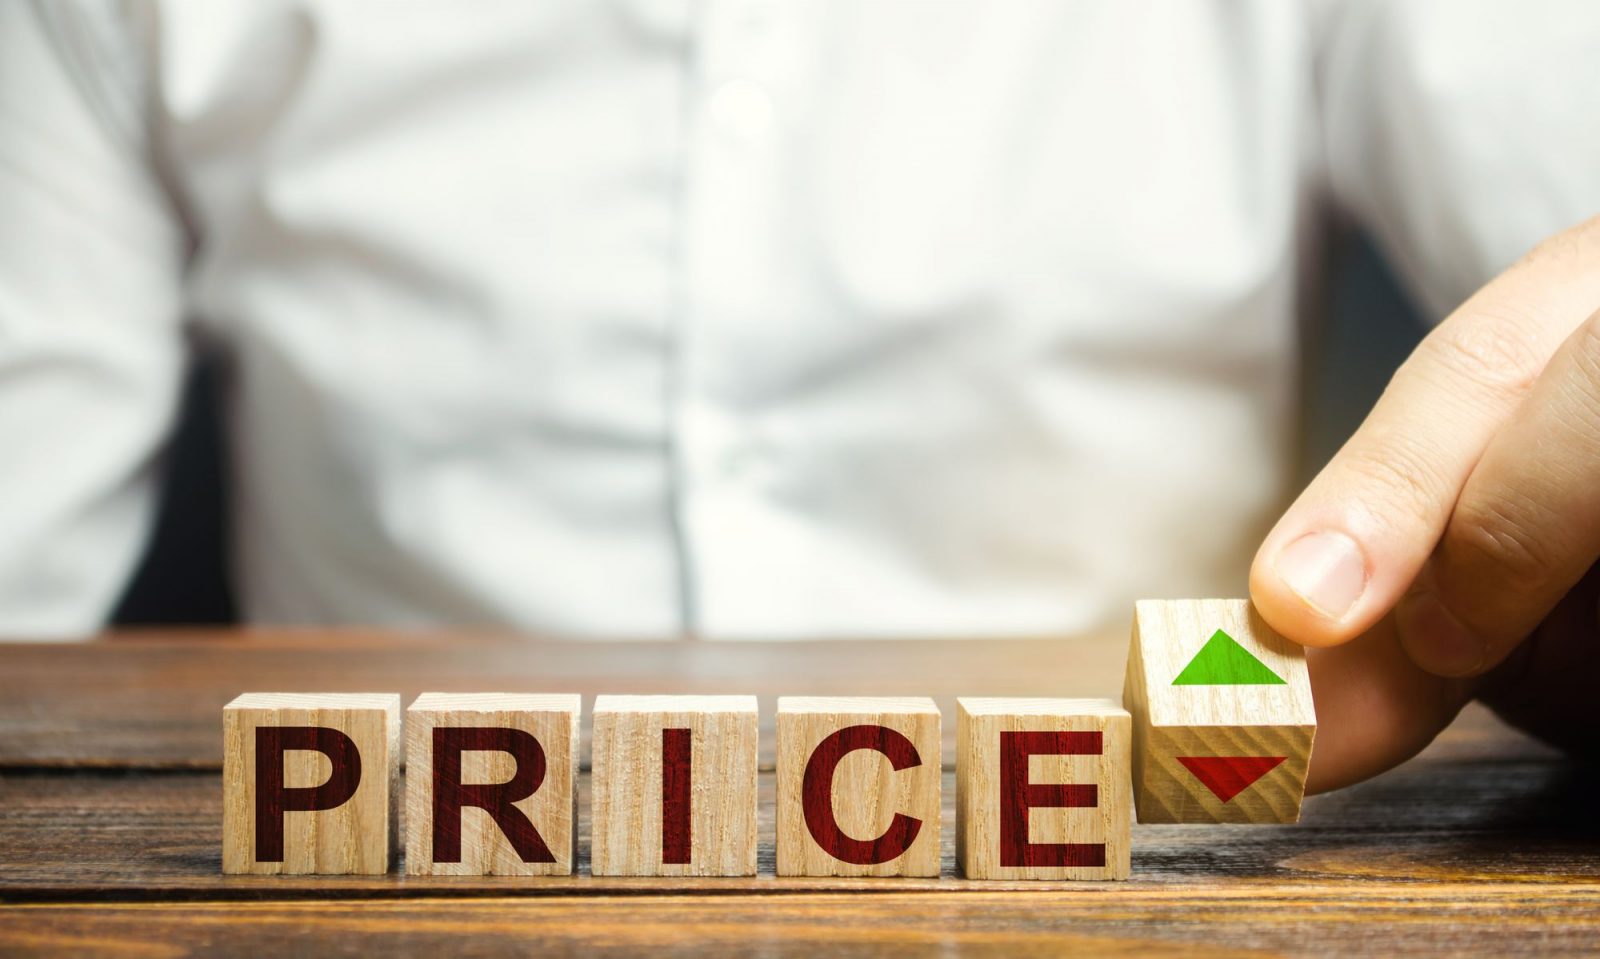 Course; Price (Marketing)